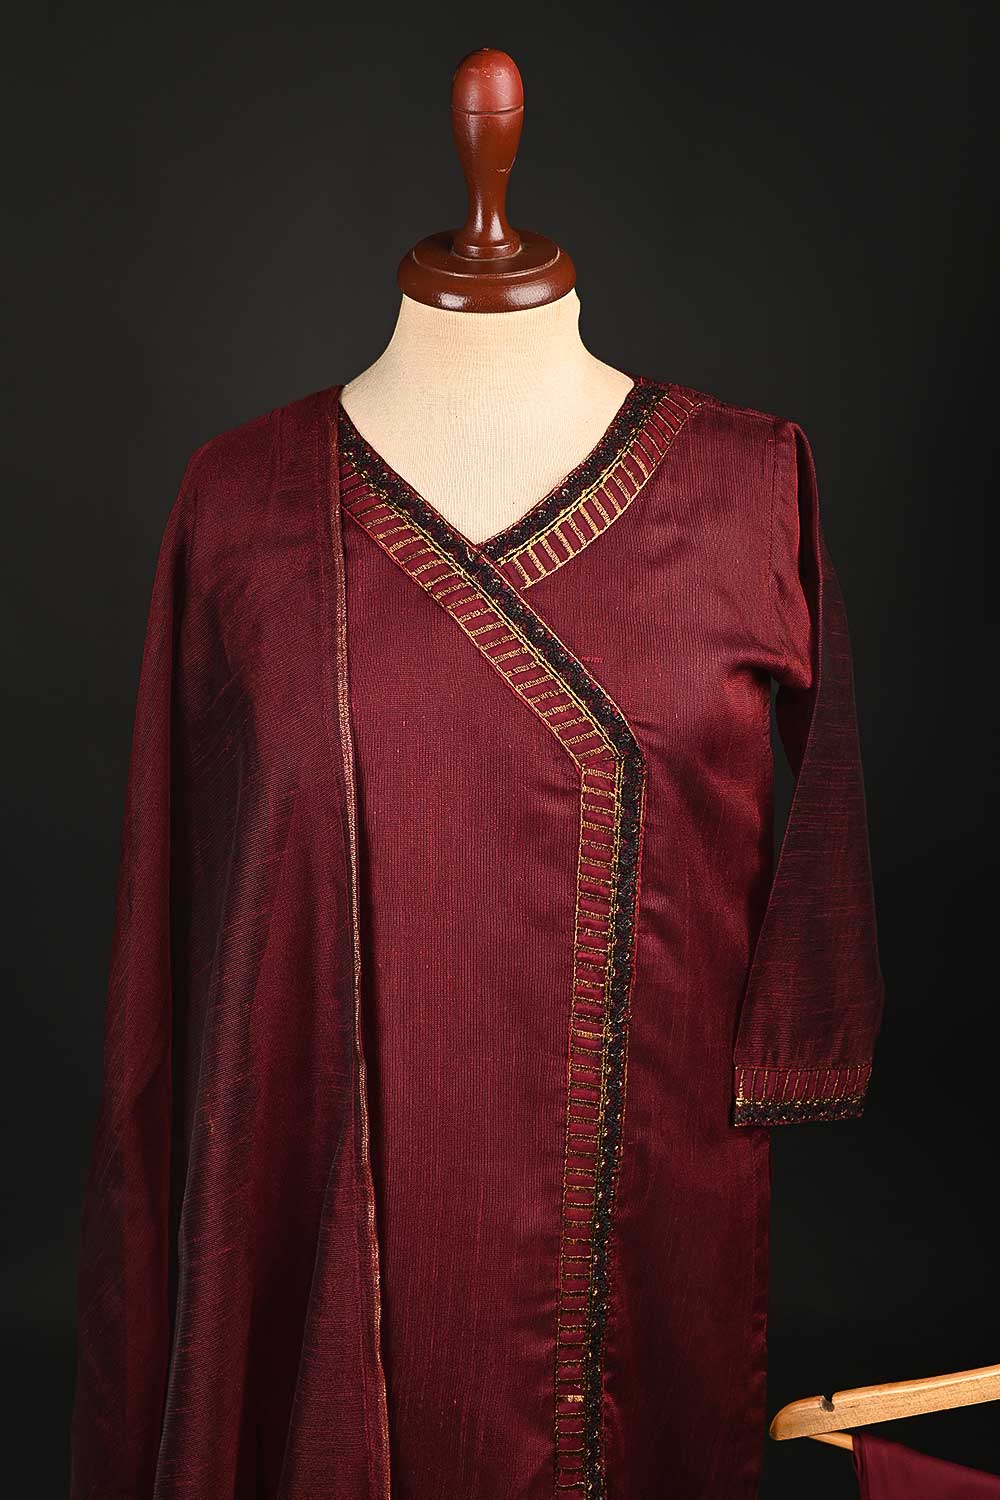 RTW-154-Maroon - 3Pc Stitched Khaadi Net Embroidered Dress